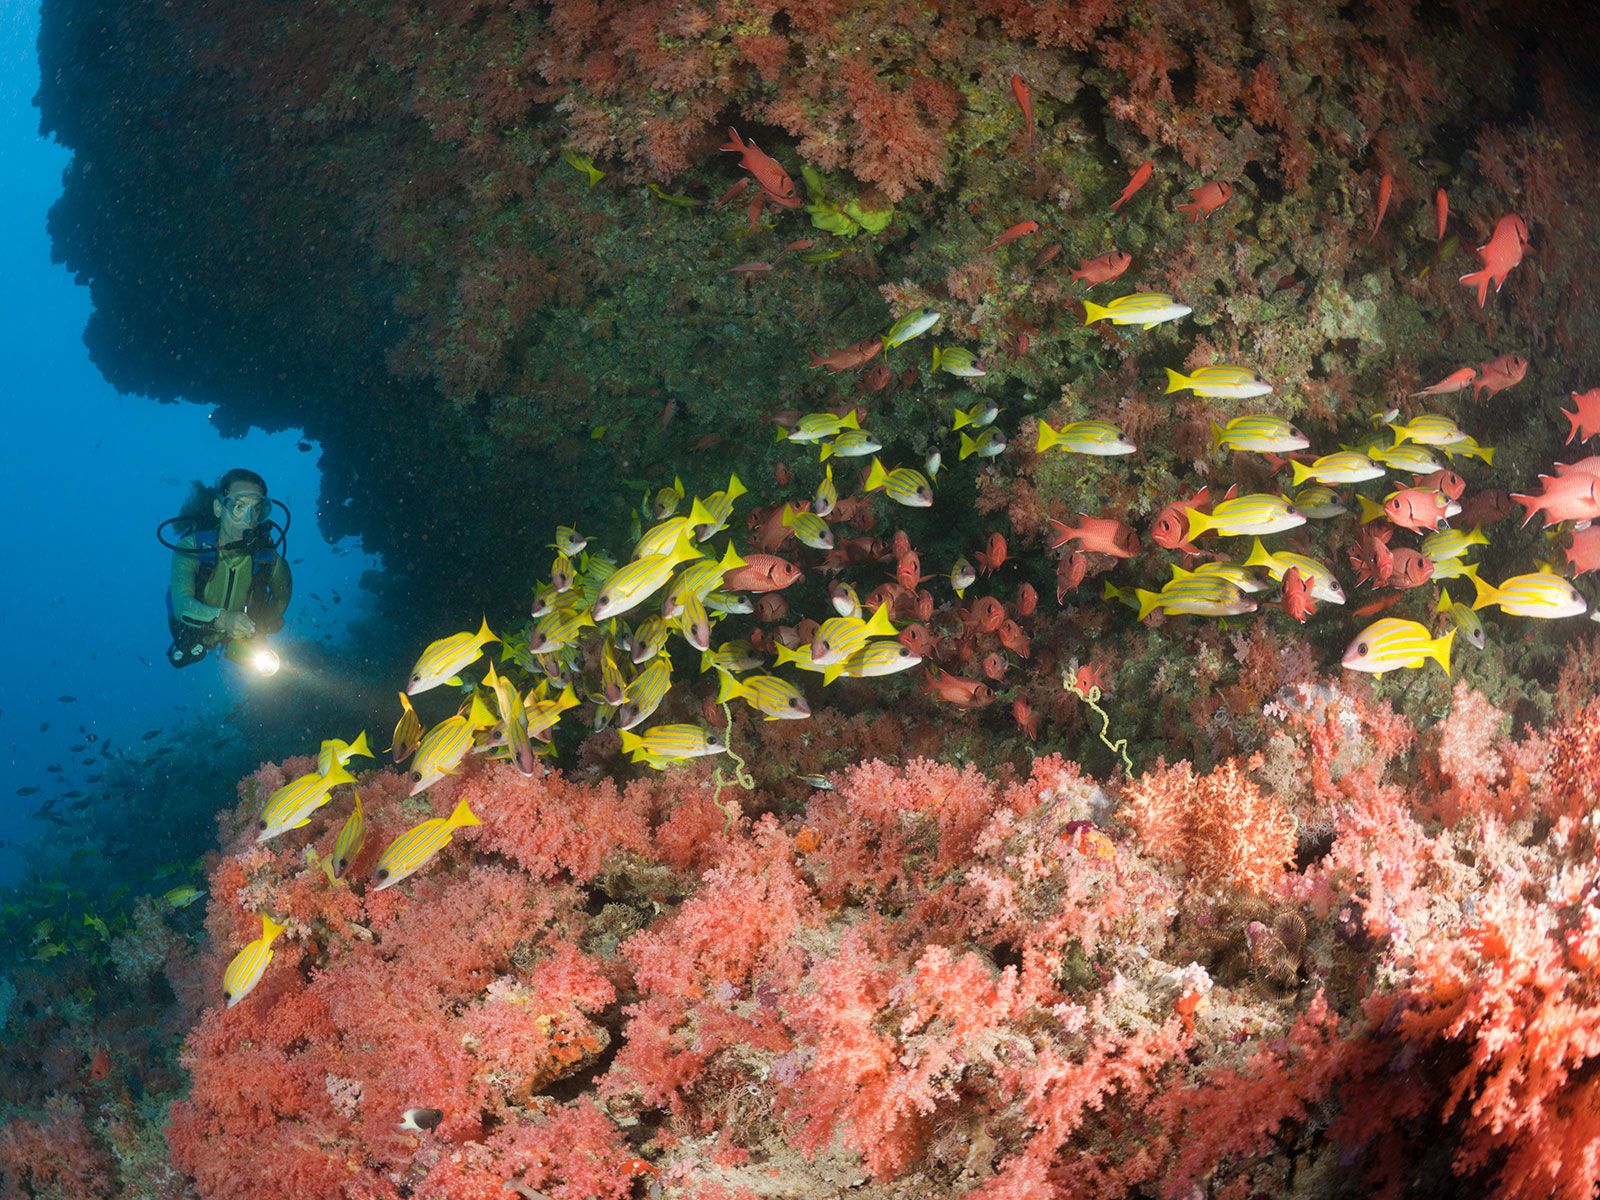 Oceanographers discover big underwater waves